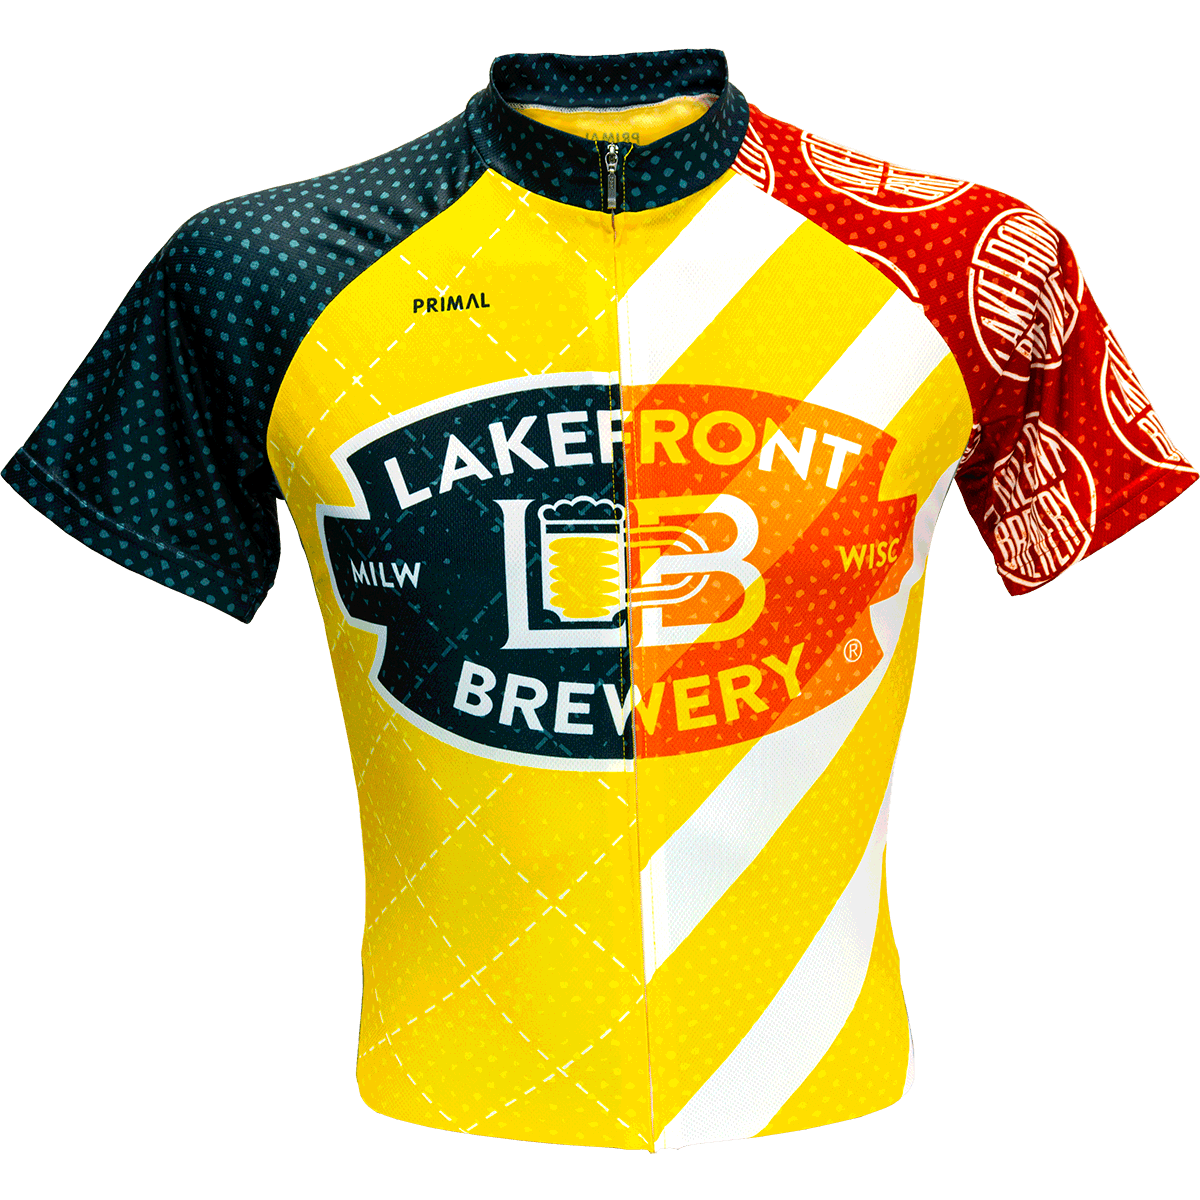 Bike Jersey - Lakefront Brewery